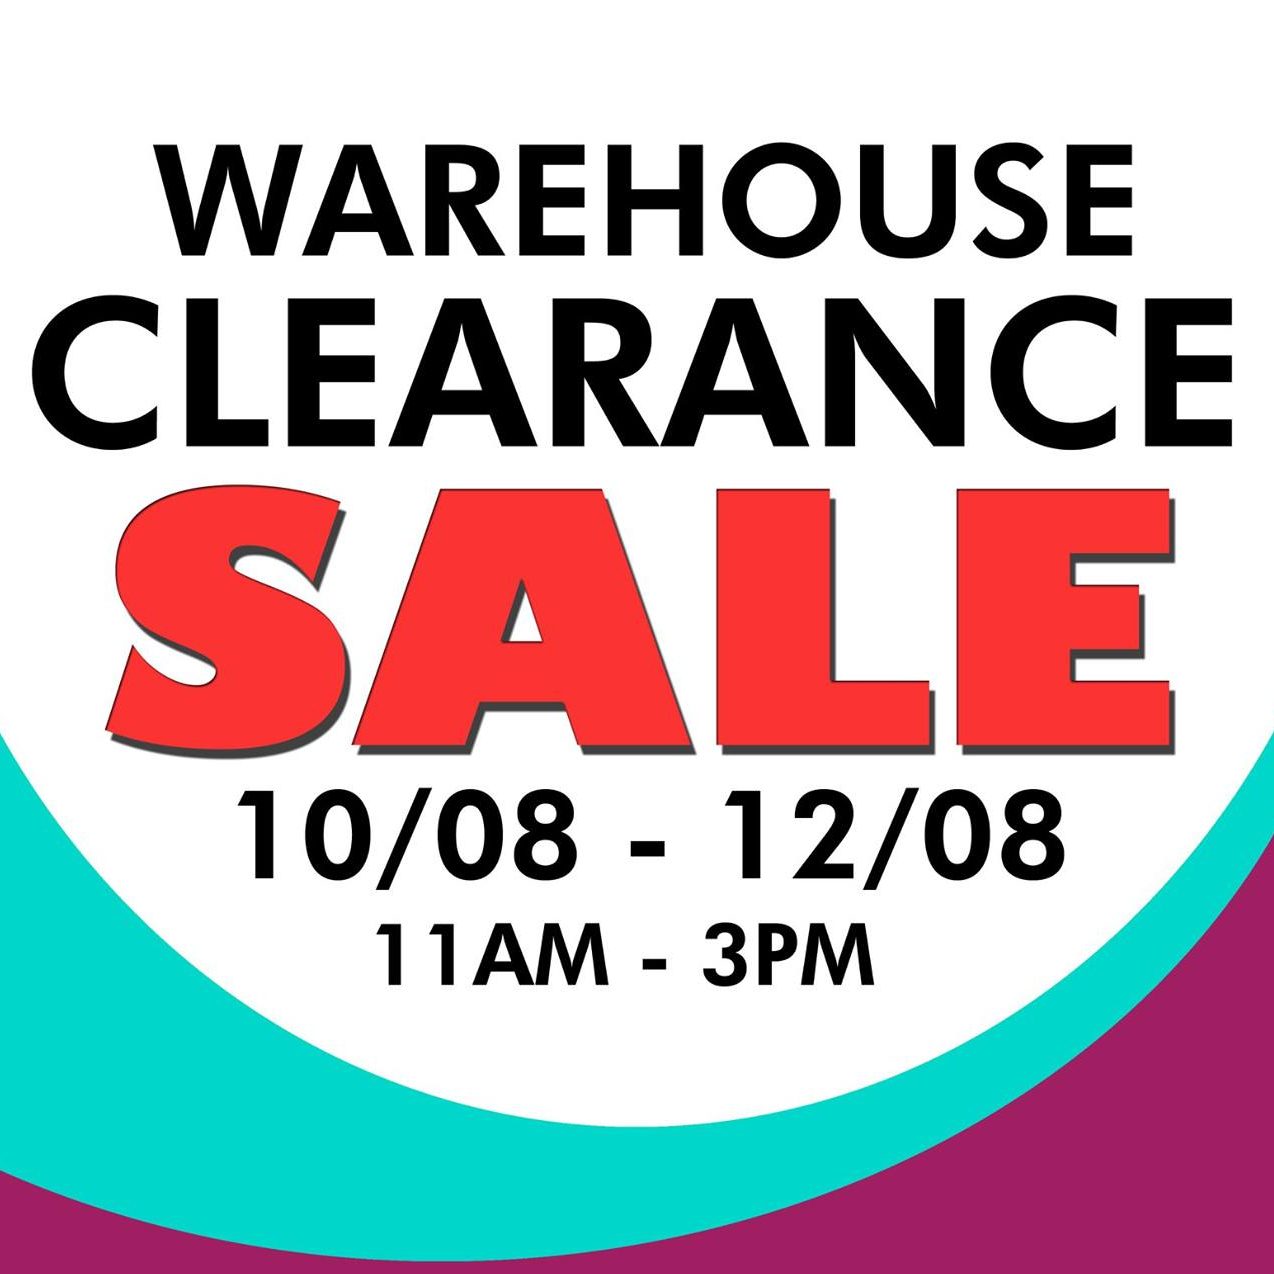 Polaris Warehouse Clearance Sale Singapore Promotion 10 to 12 Aug 2016